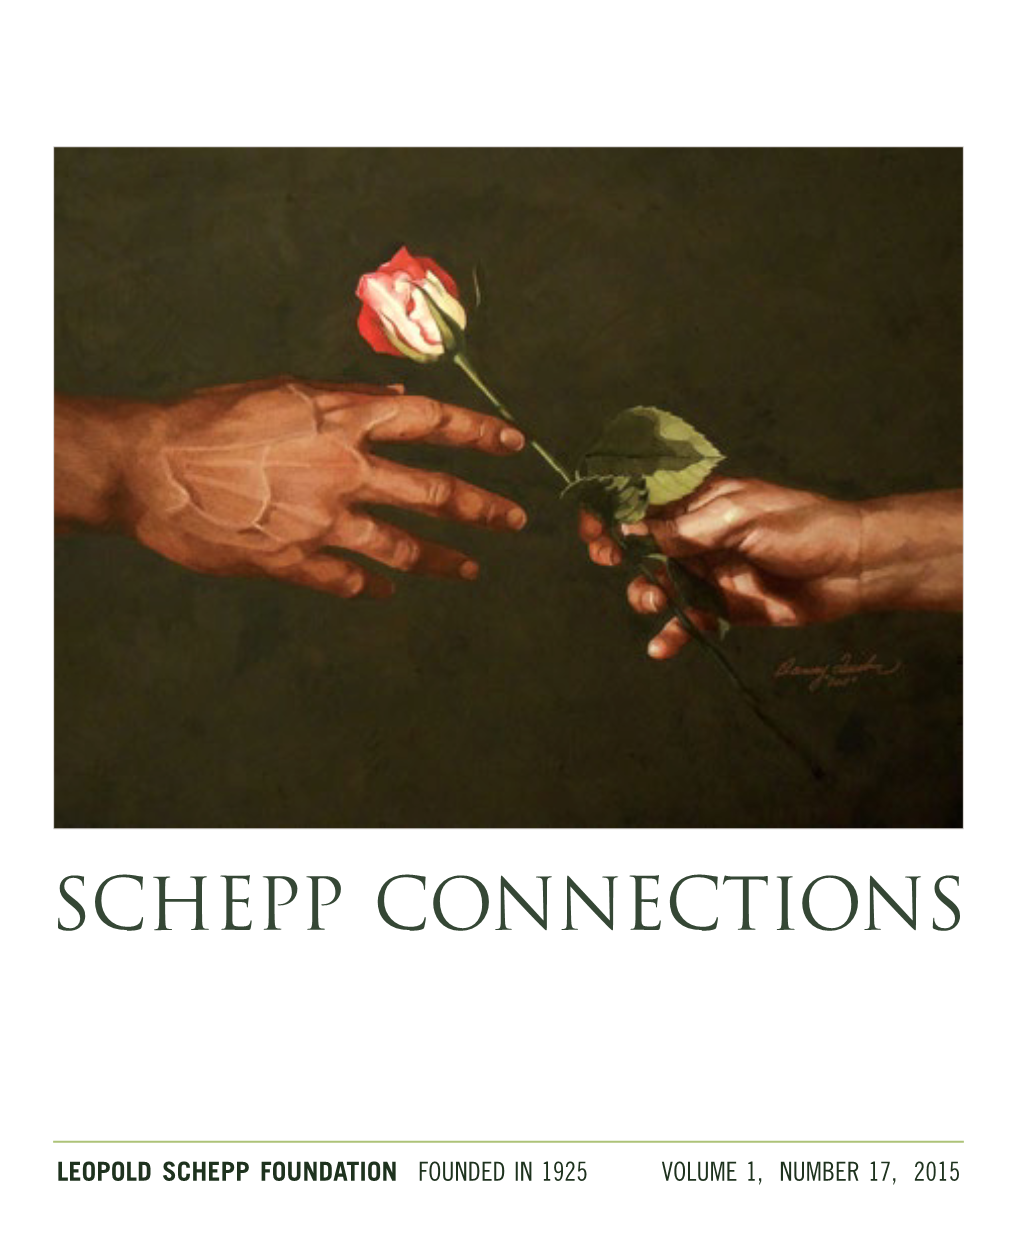 PDF of Schepp Connections 17, 2015